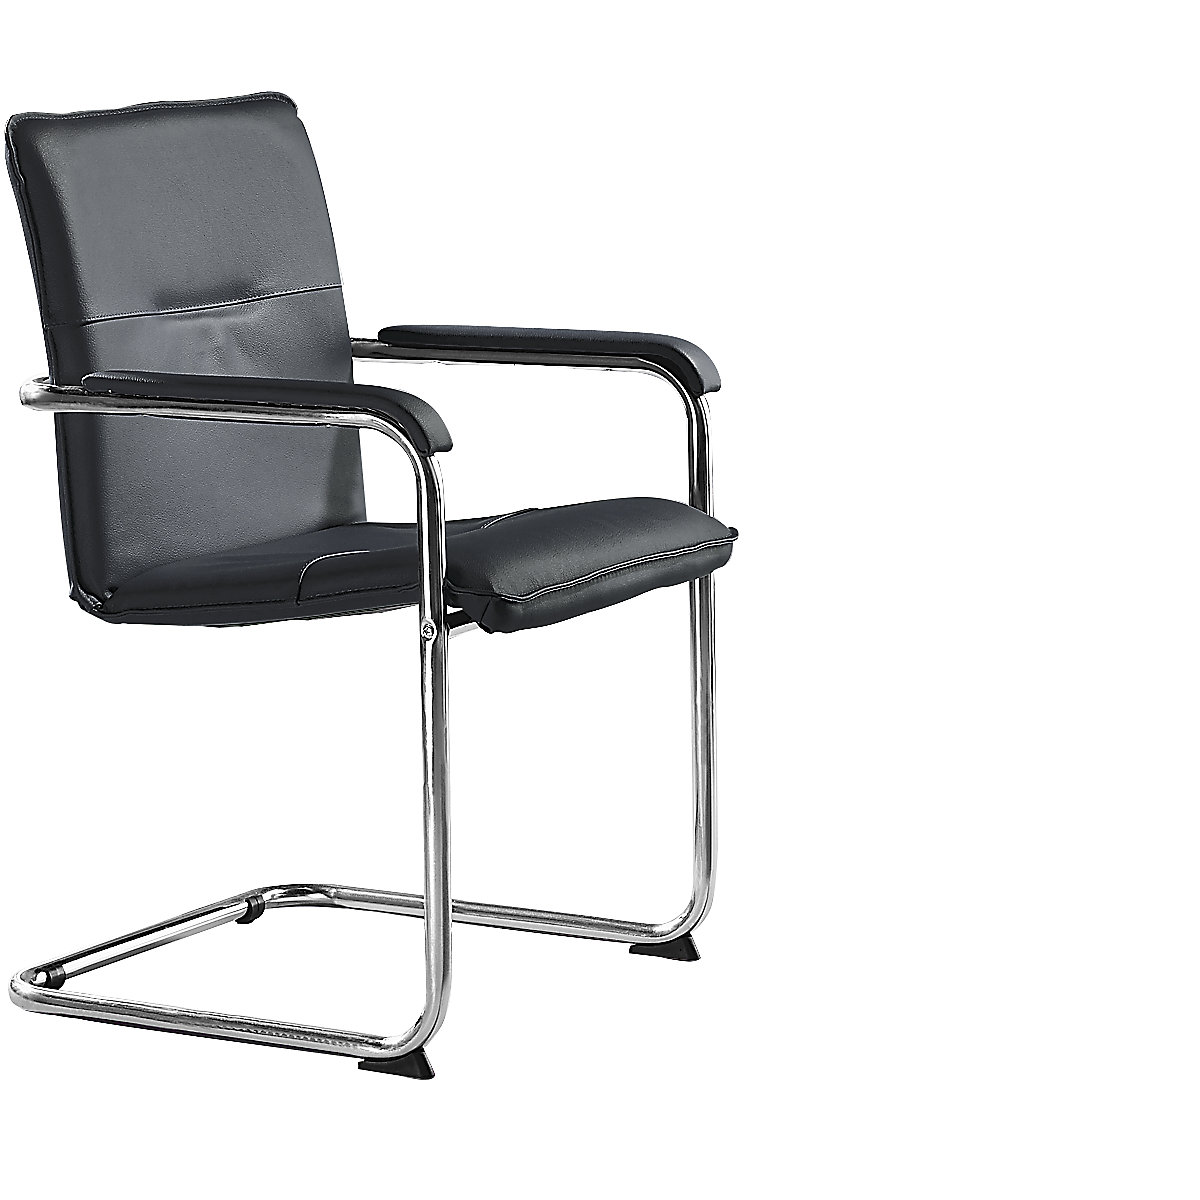 Konzolna stolica s presvlakom od prave kože